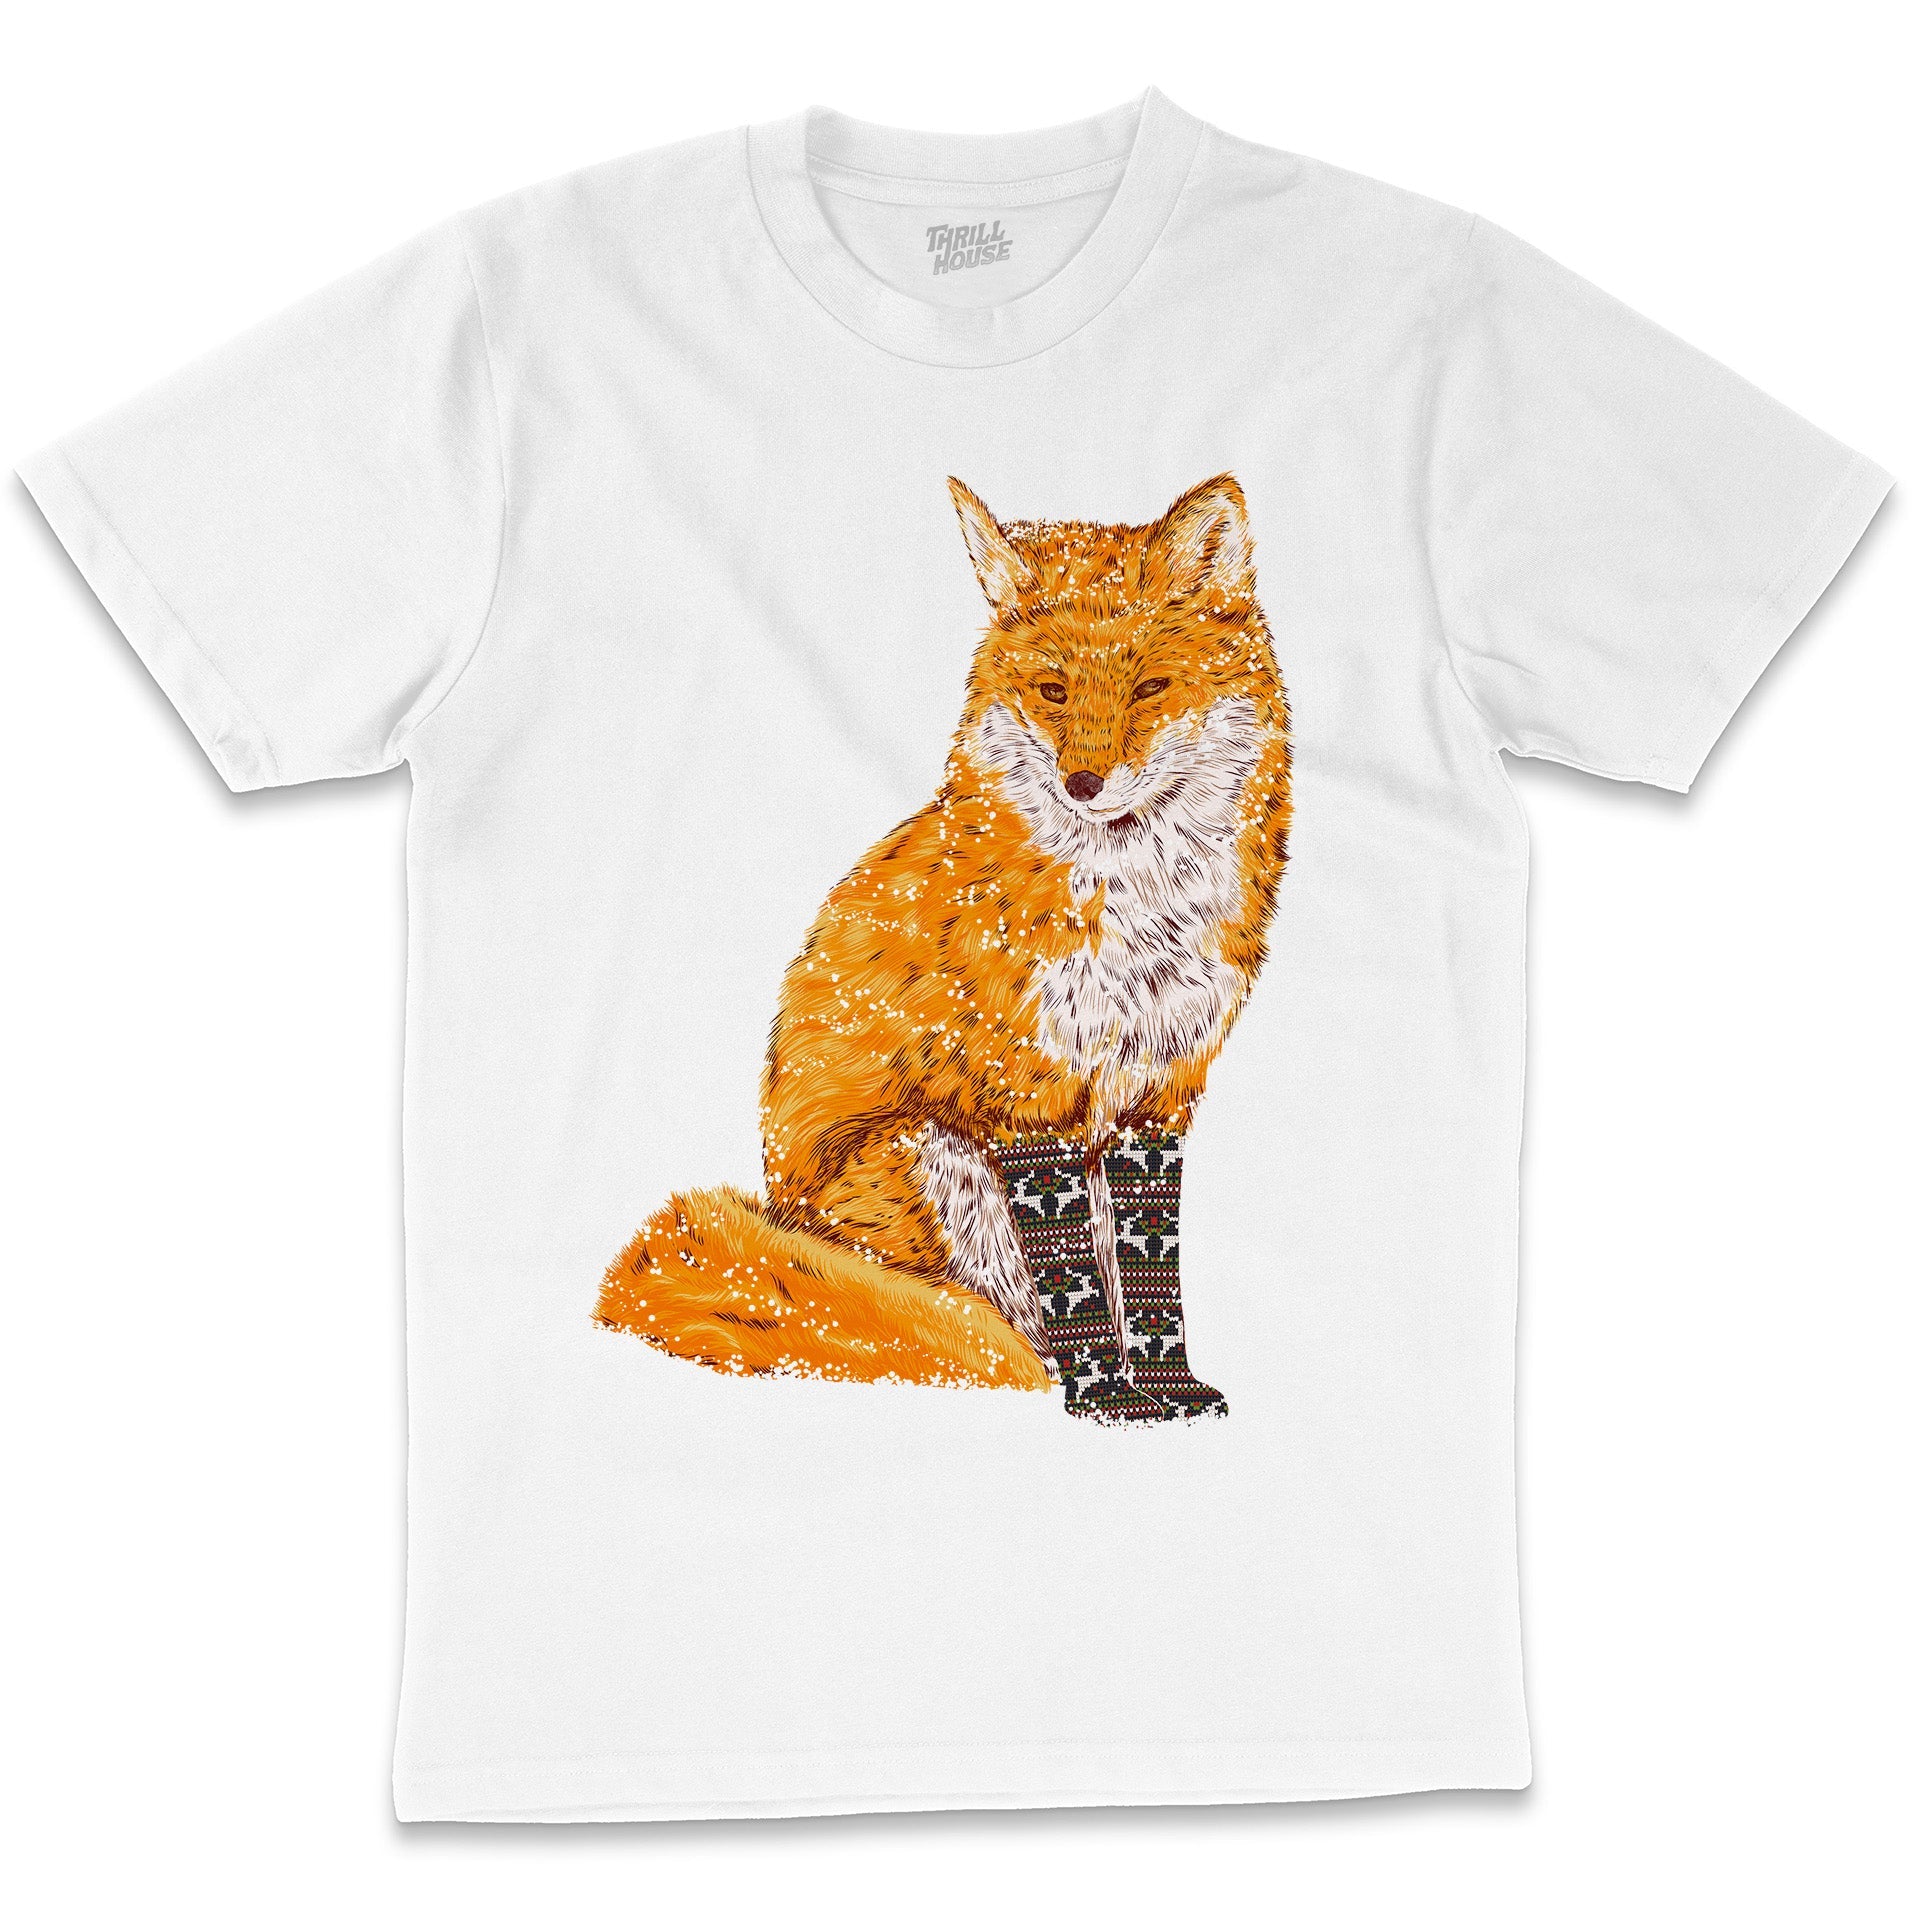 Winter Sock Fox Socks Funny Humorous Artsy Nature Animal Artistic Graphic Cotton T-Shirt